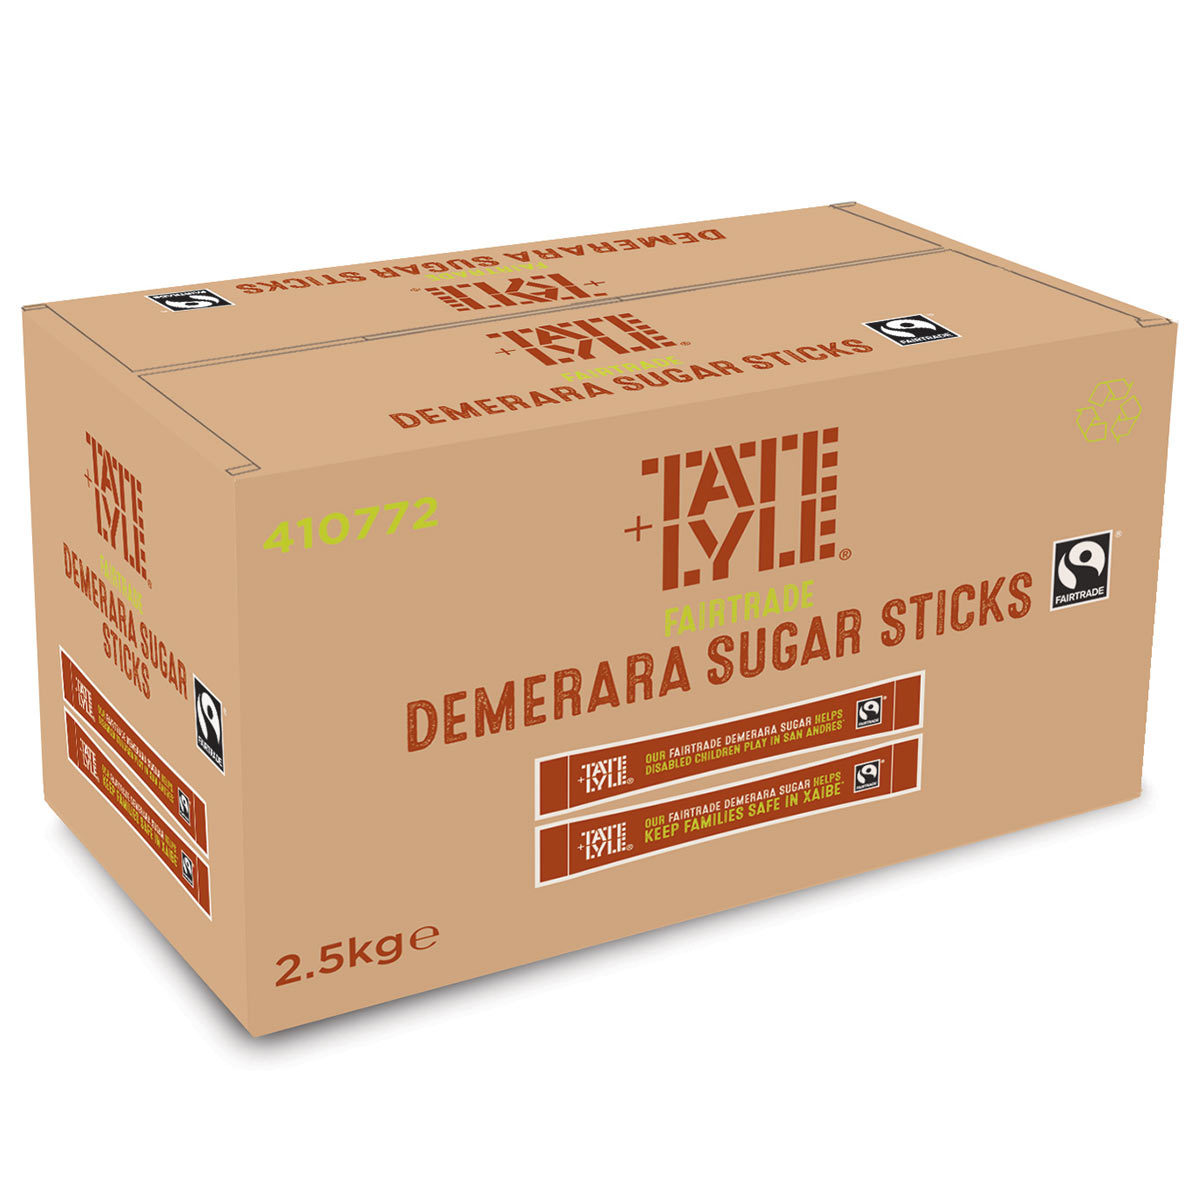 Image of brown Tate & Lyle box on white background with Demerara Sugar Sticks text